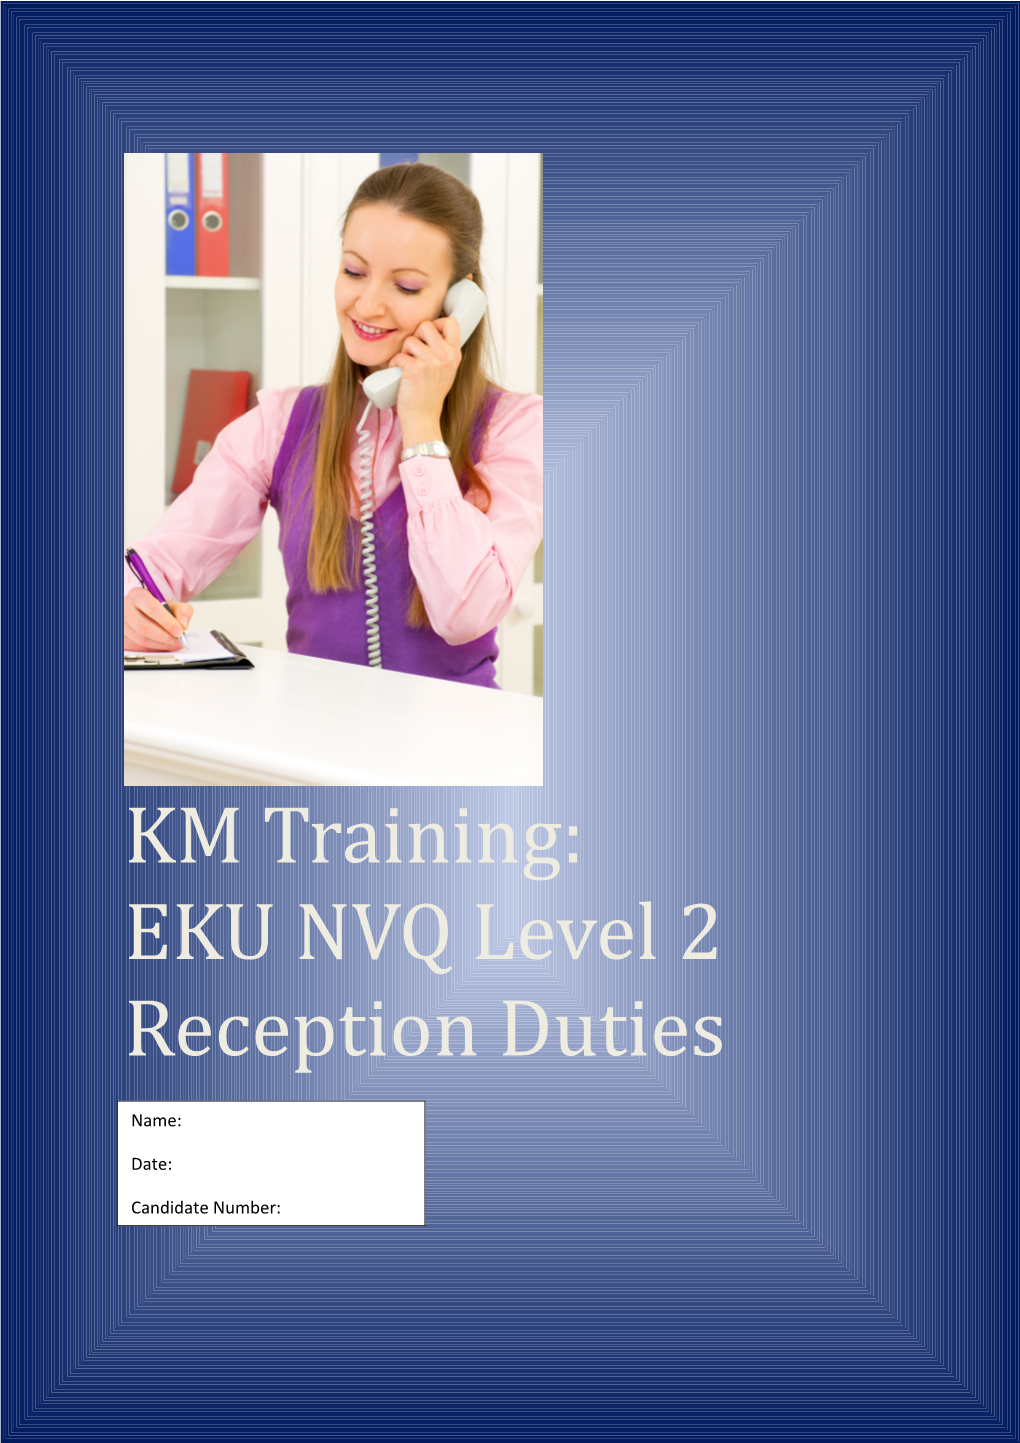 KM Training: EKU NVQ Level 2 Reception Duties